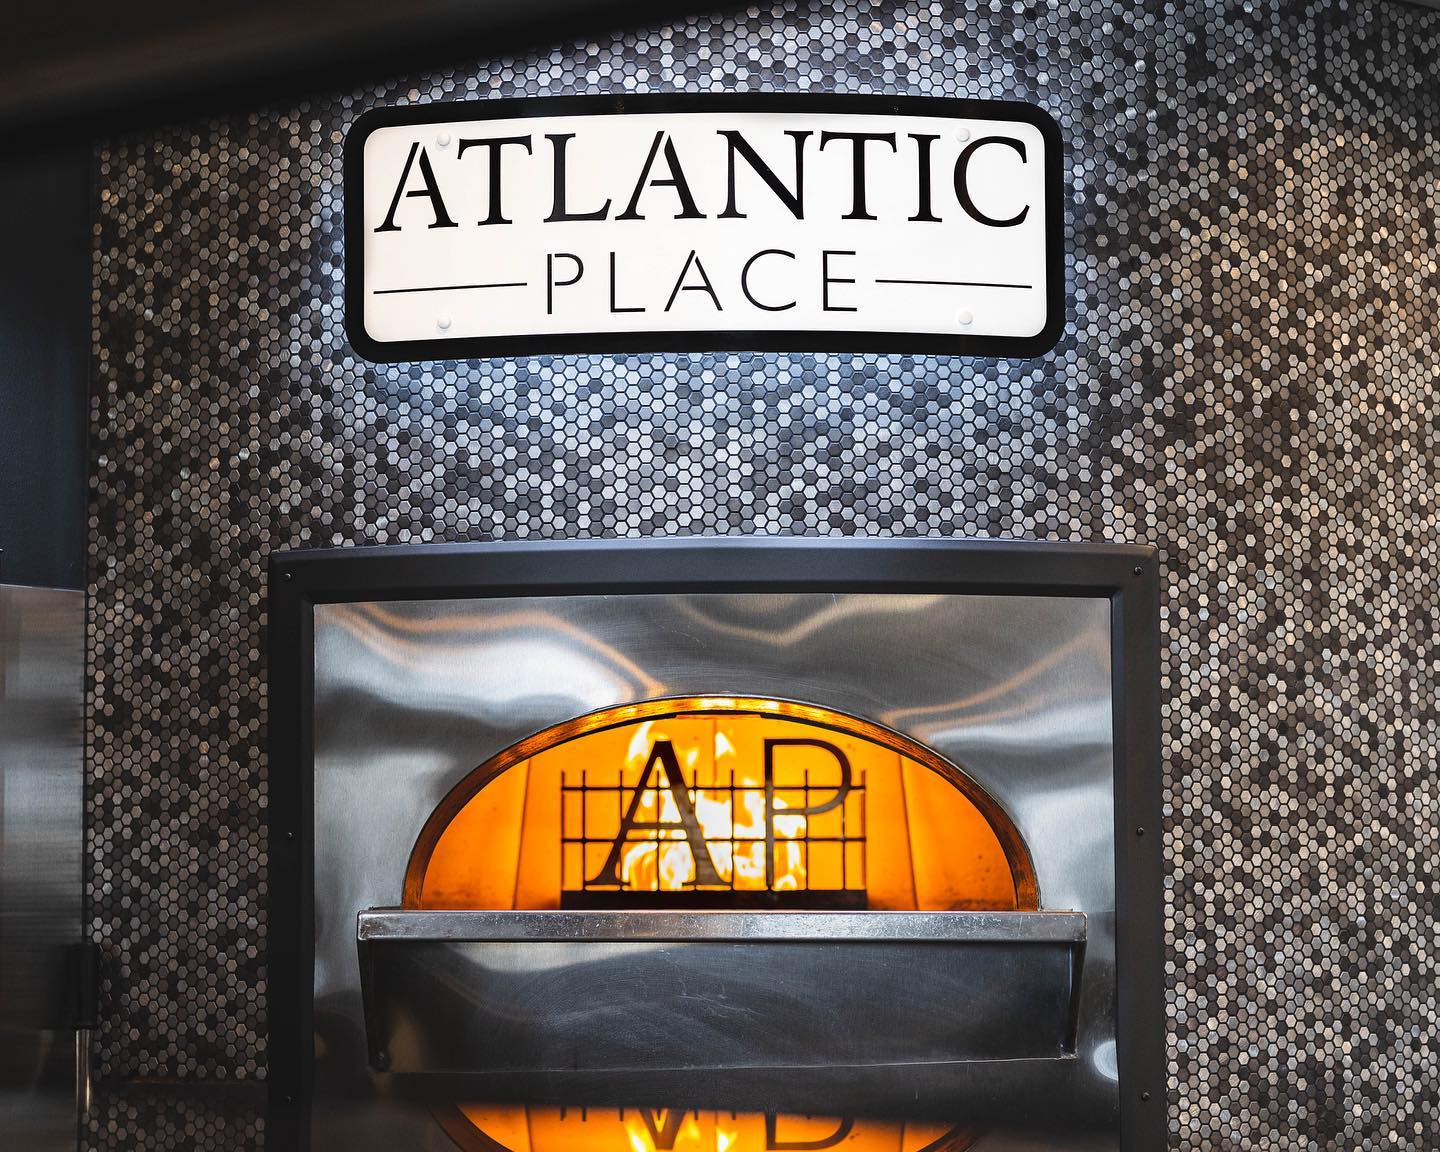 Atlantic Place pizza oven